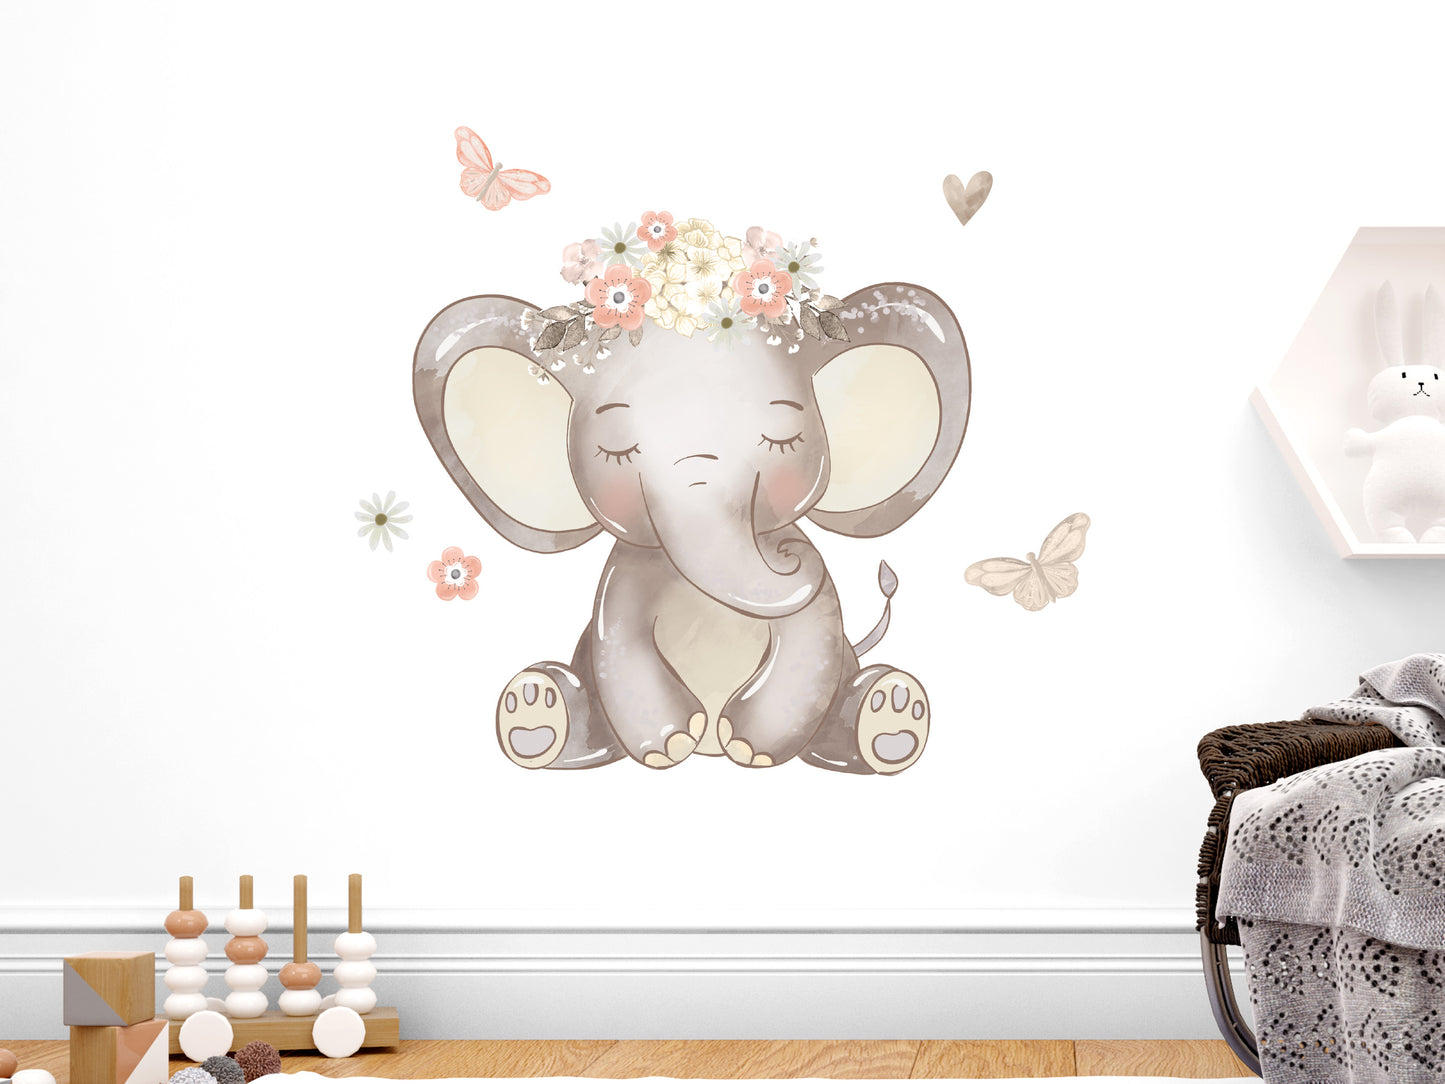 mit – Walls Schmetterlingen Baby Mural (Wandsticker/Wandtattoo) Süßer Elefant: